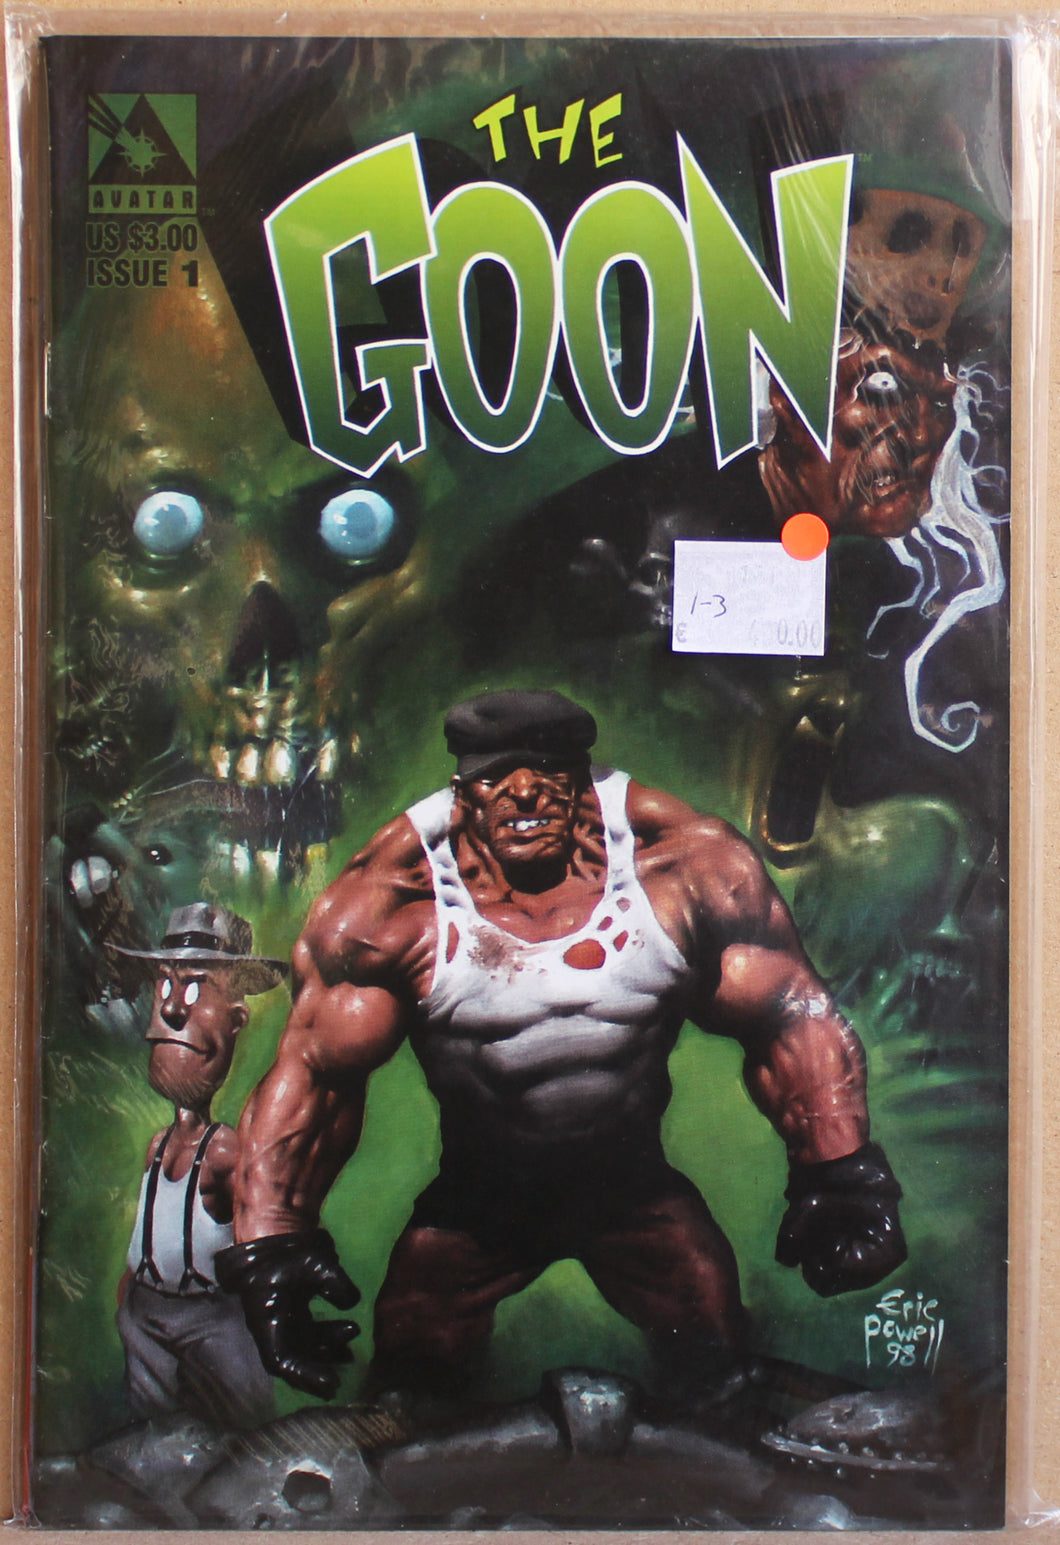 the Goon